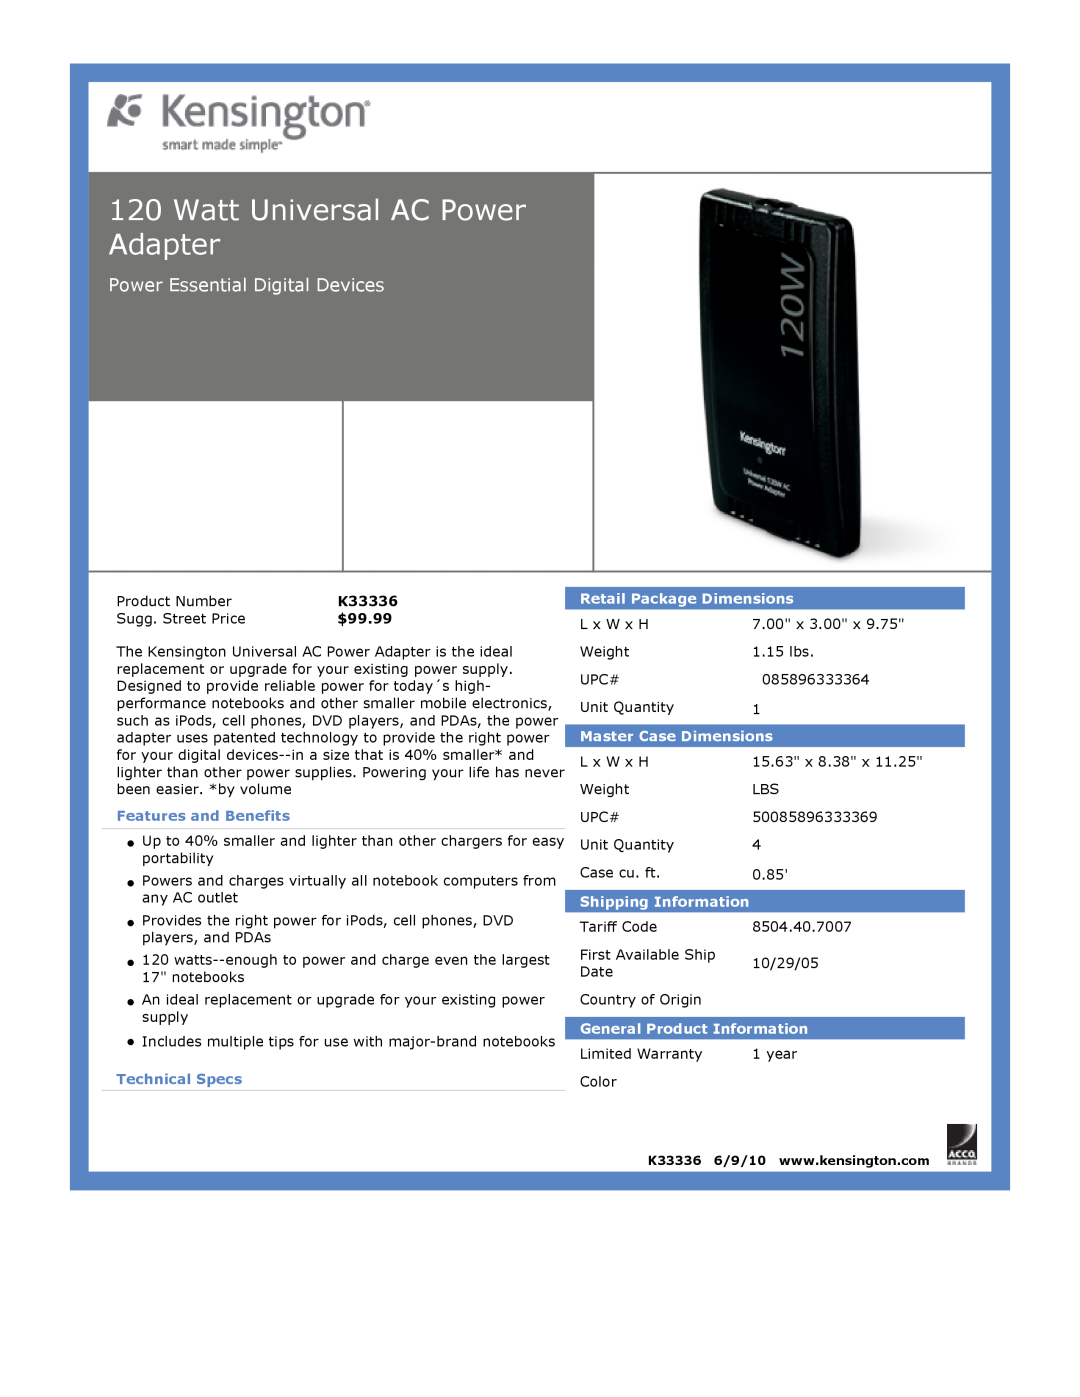 Kensington EU64325 Watt Universal AC Power Adapter, $99.99, Power Essential Digital Devices, Features and Benefits 